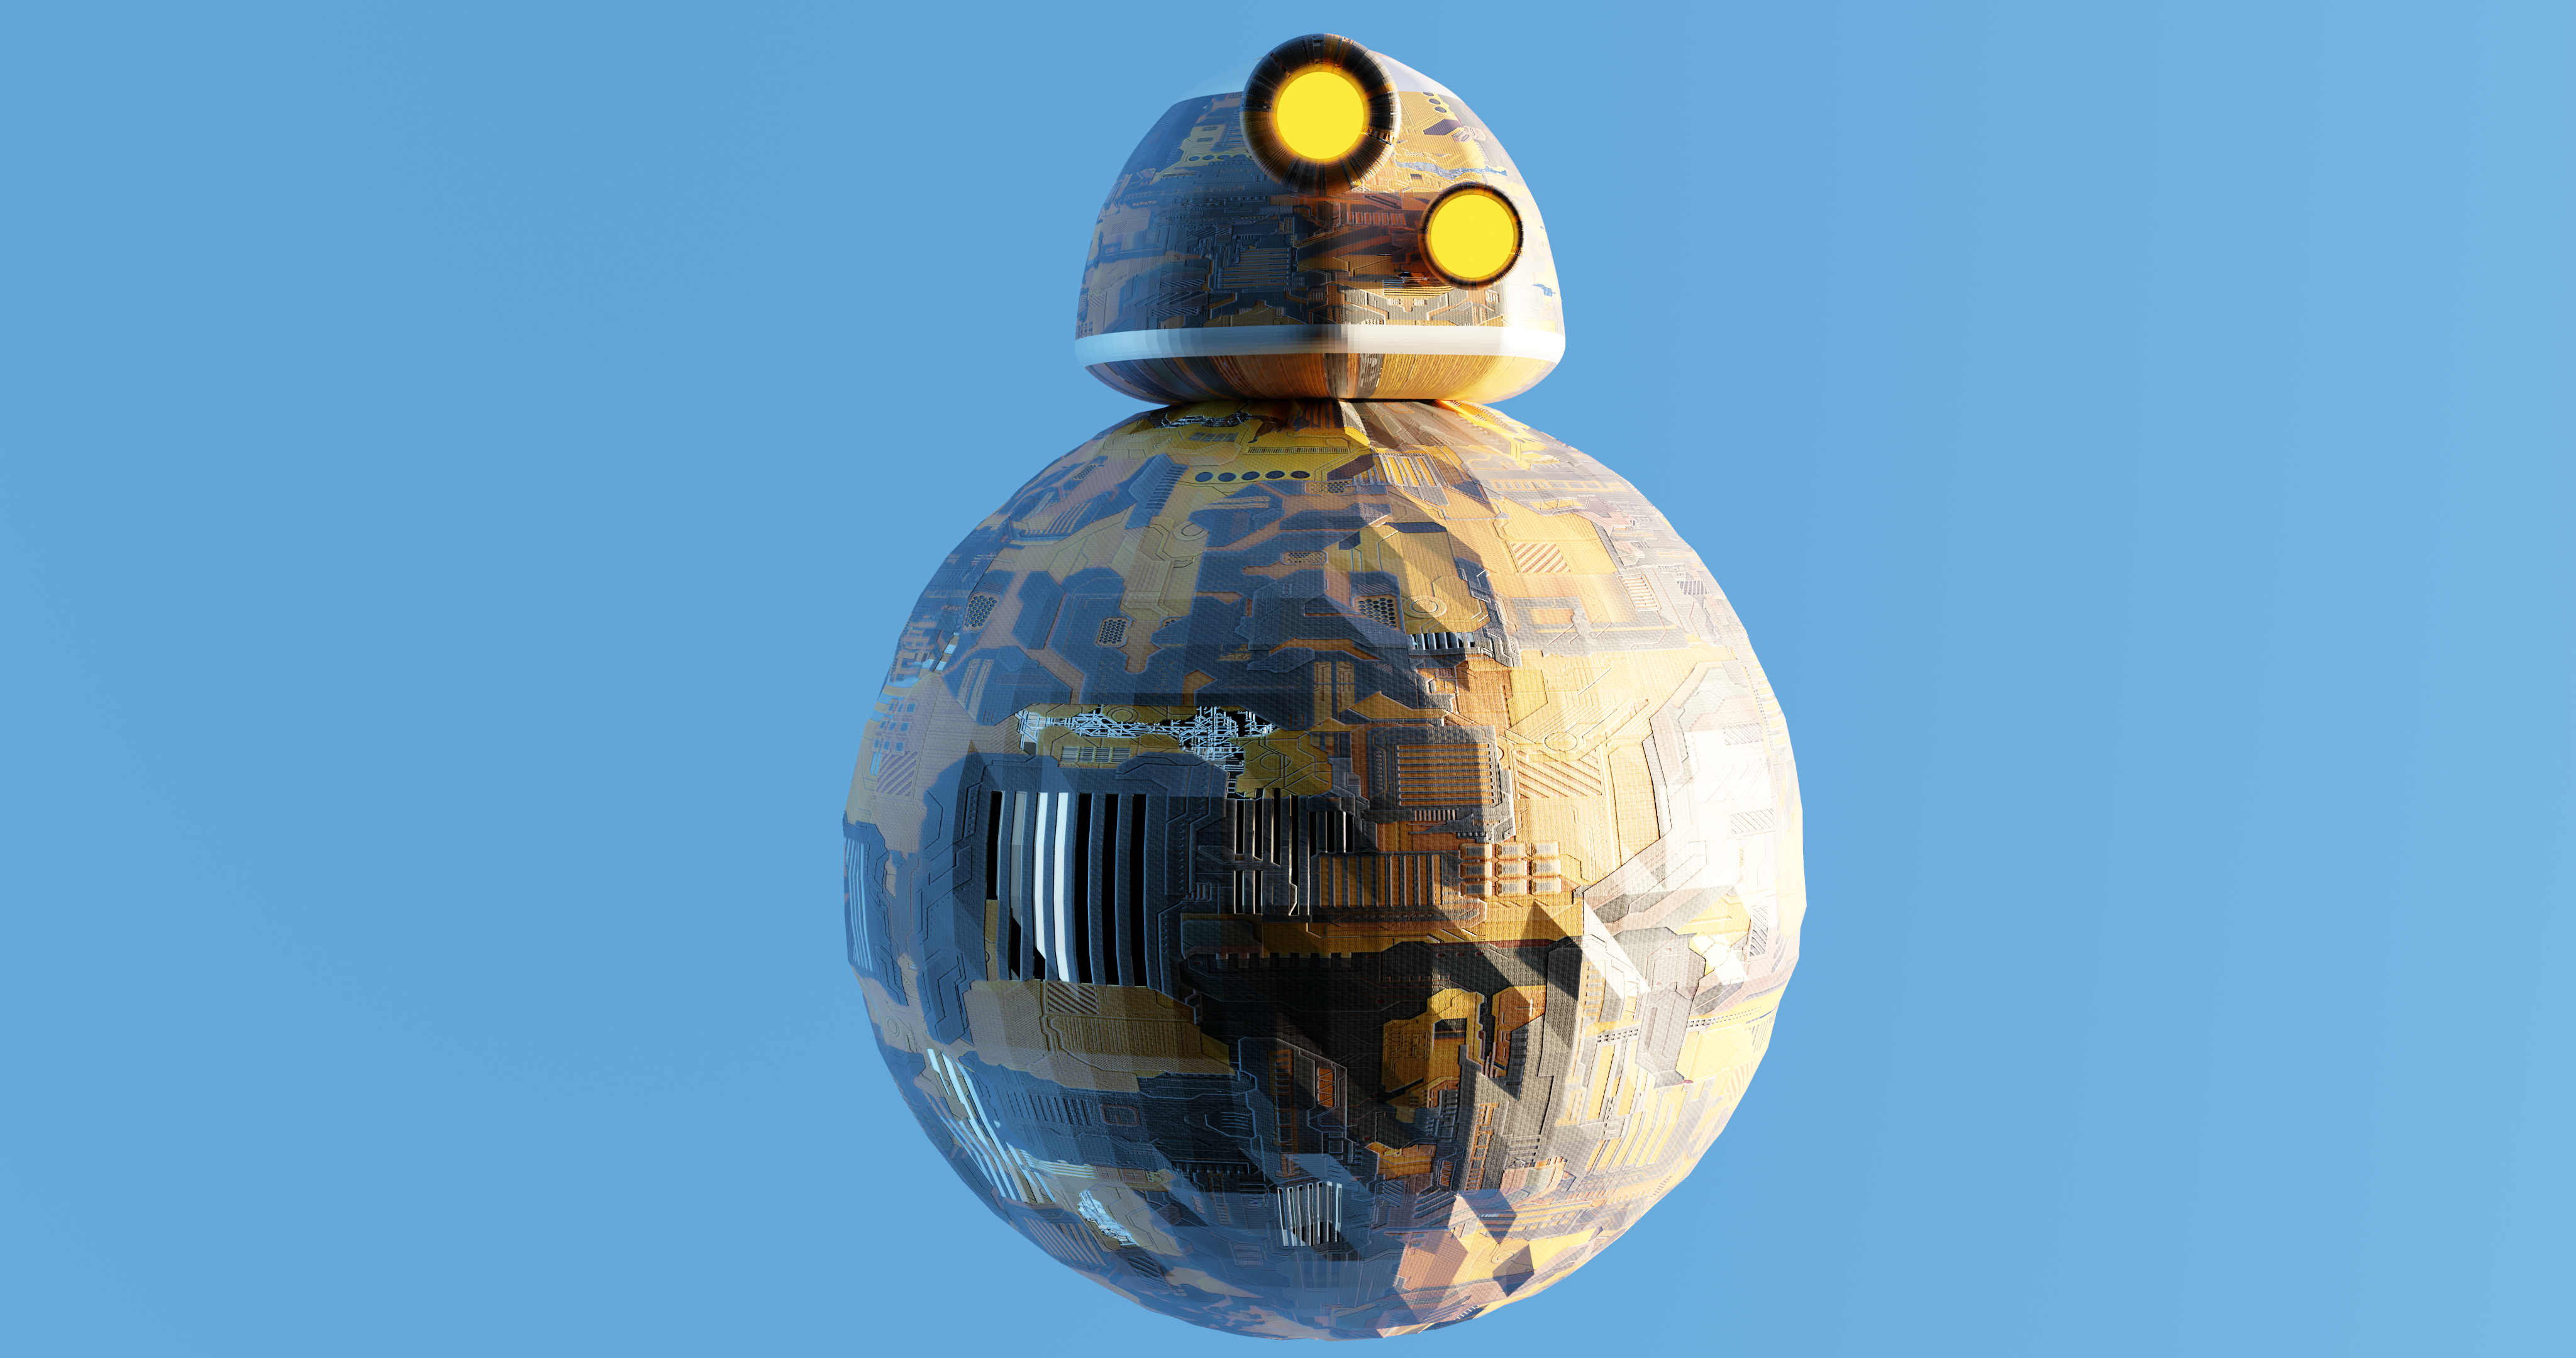 Movie Star Wars HD Wallpaper | Background Image